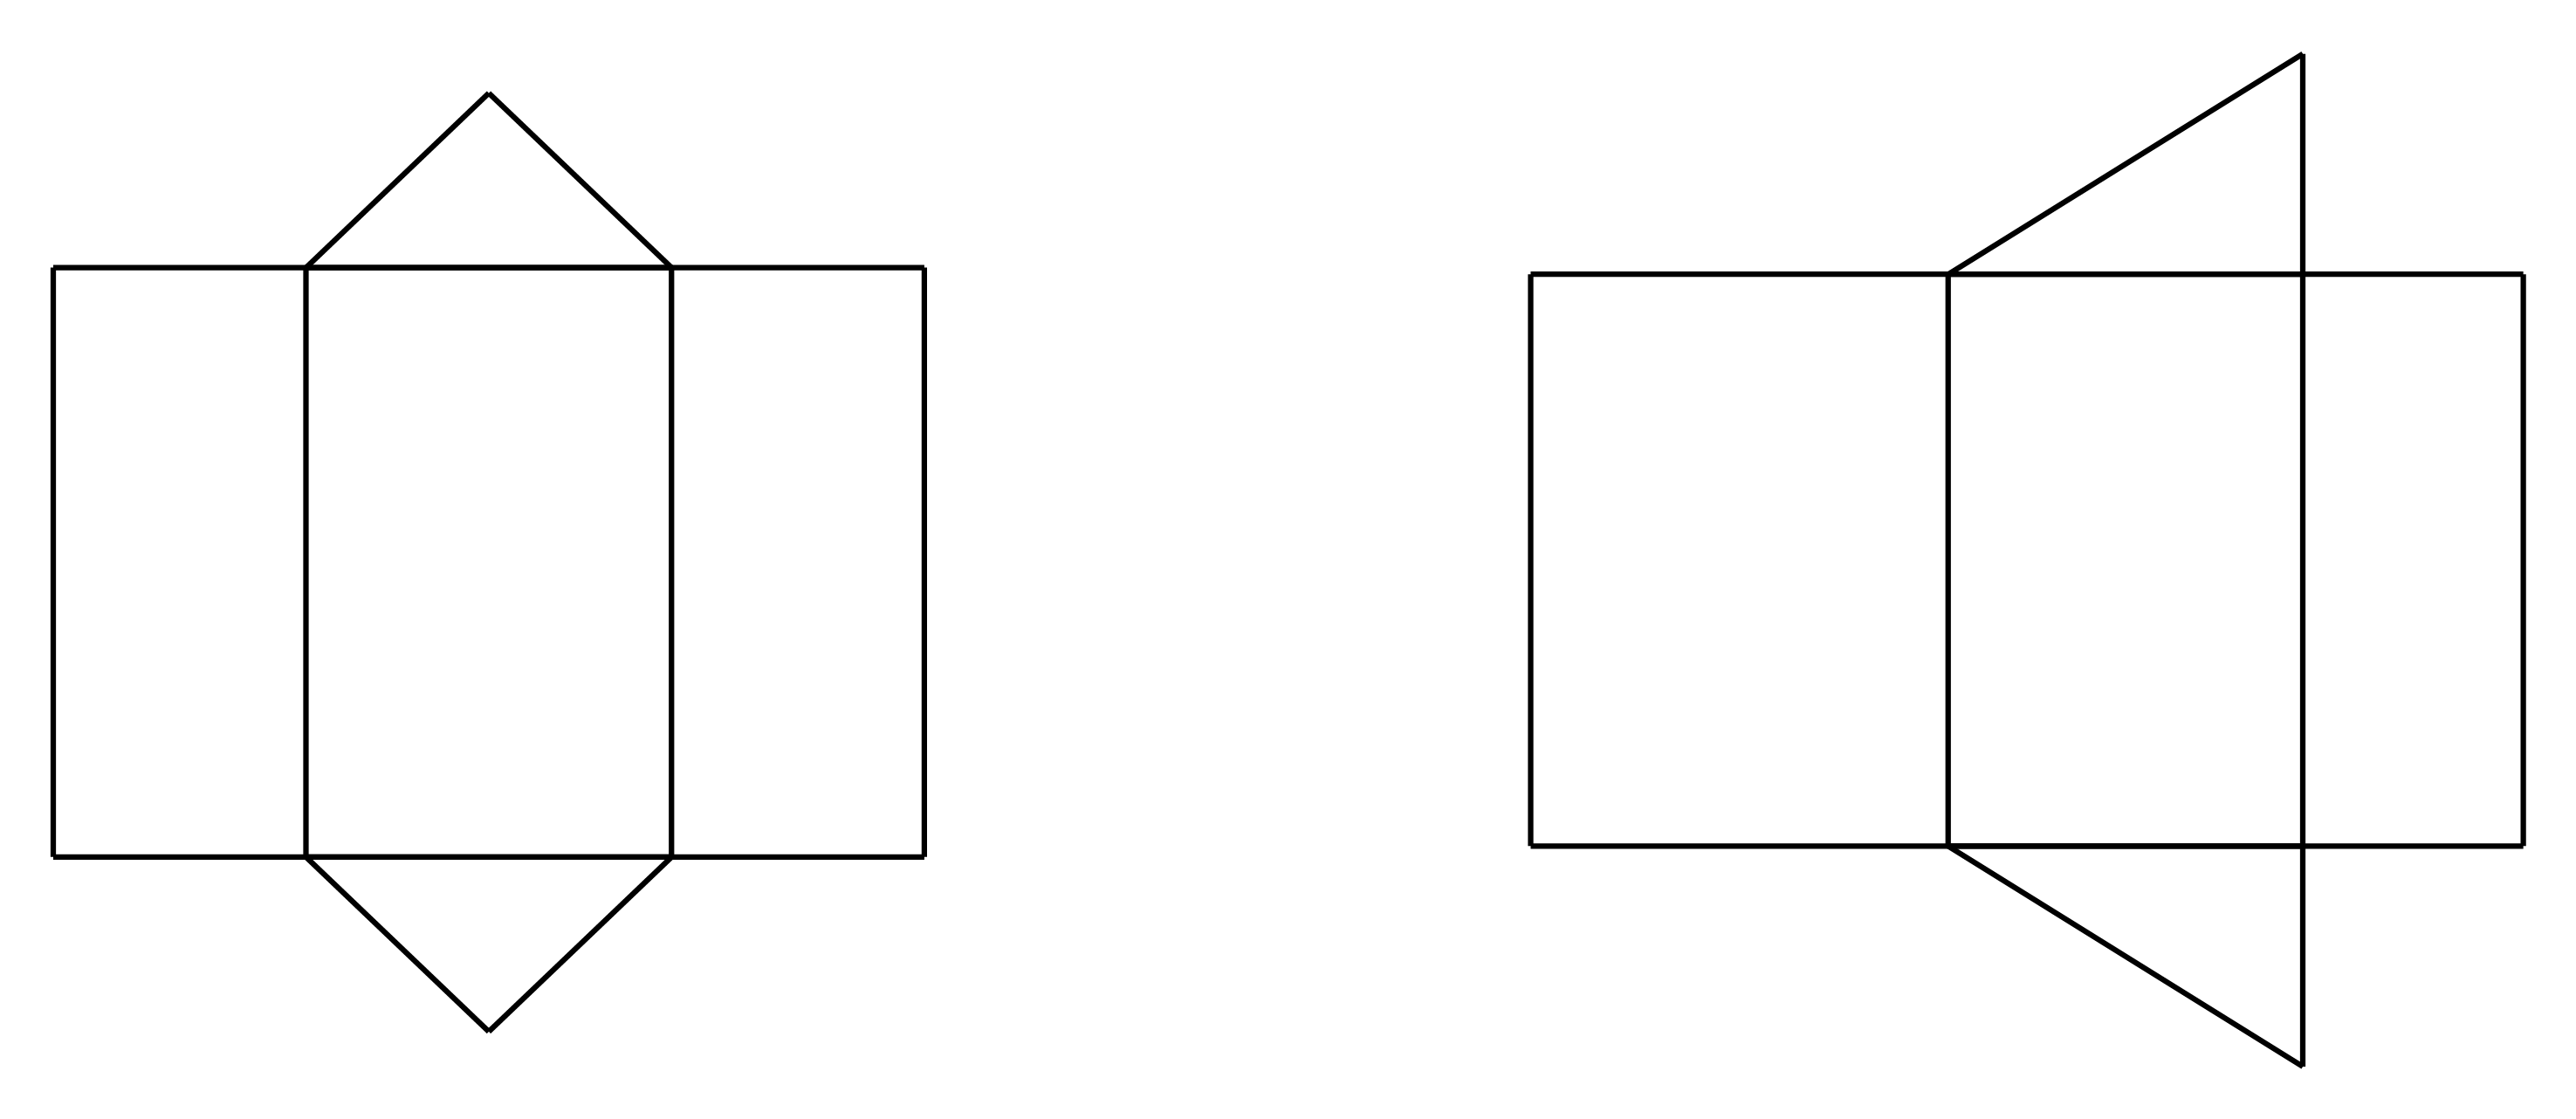 Slika prikazuje mreže dvije uspravne trostrane prizme.